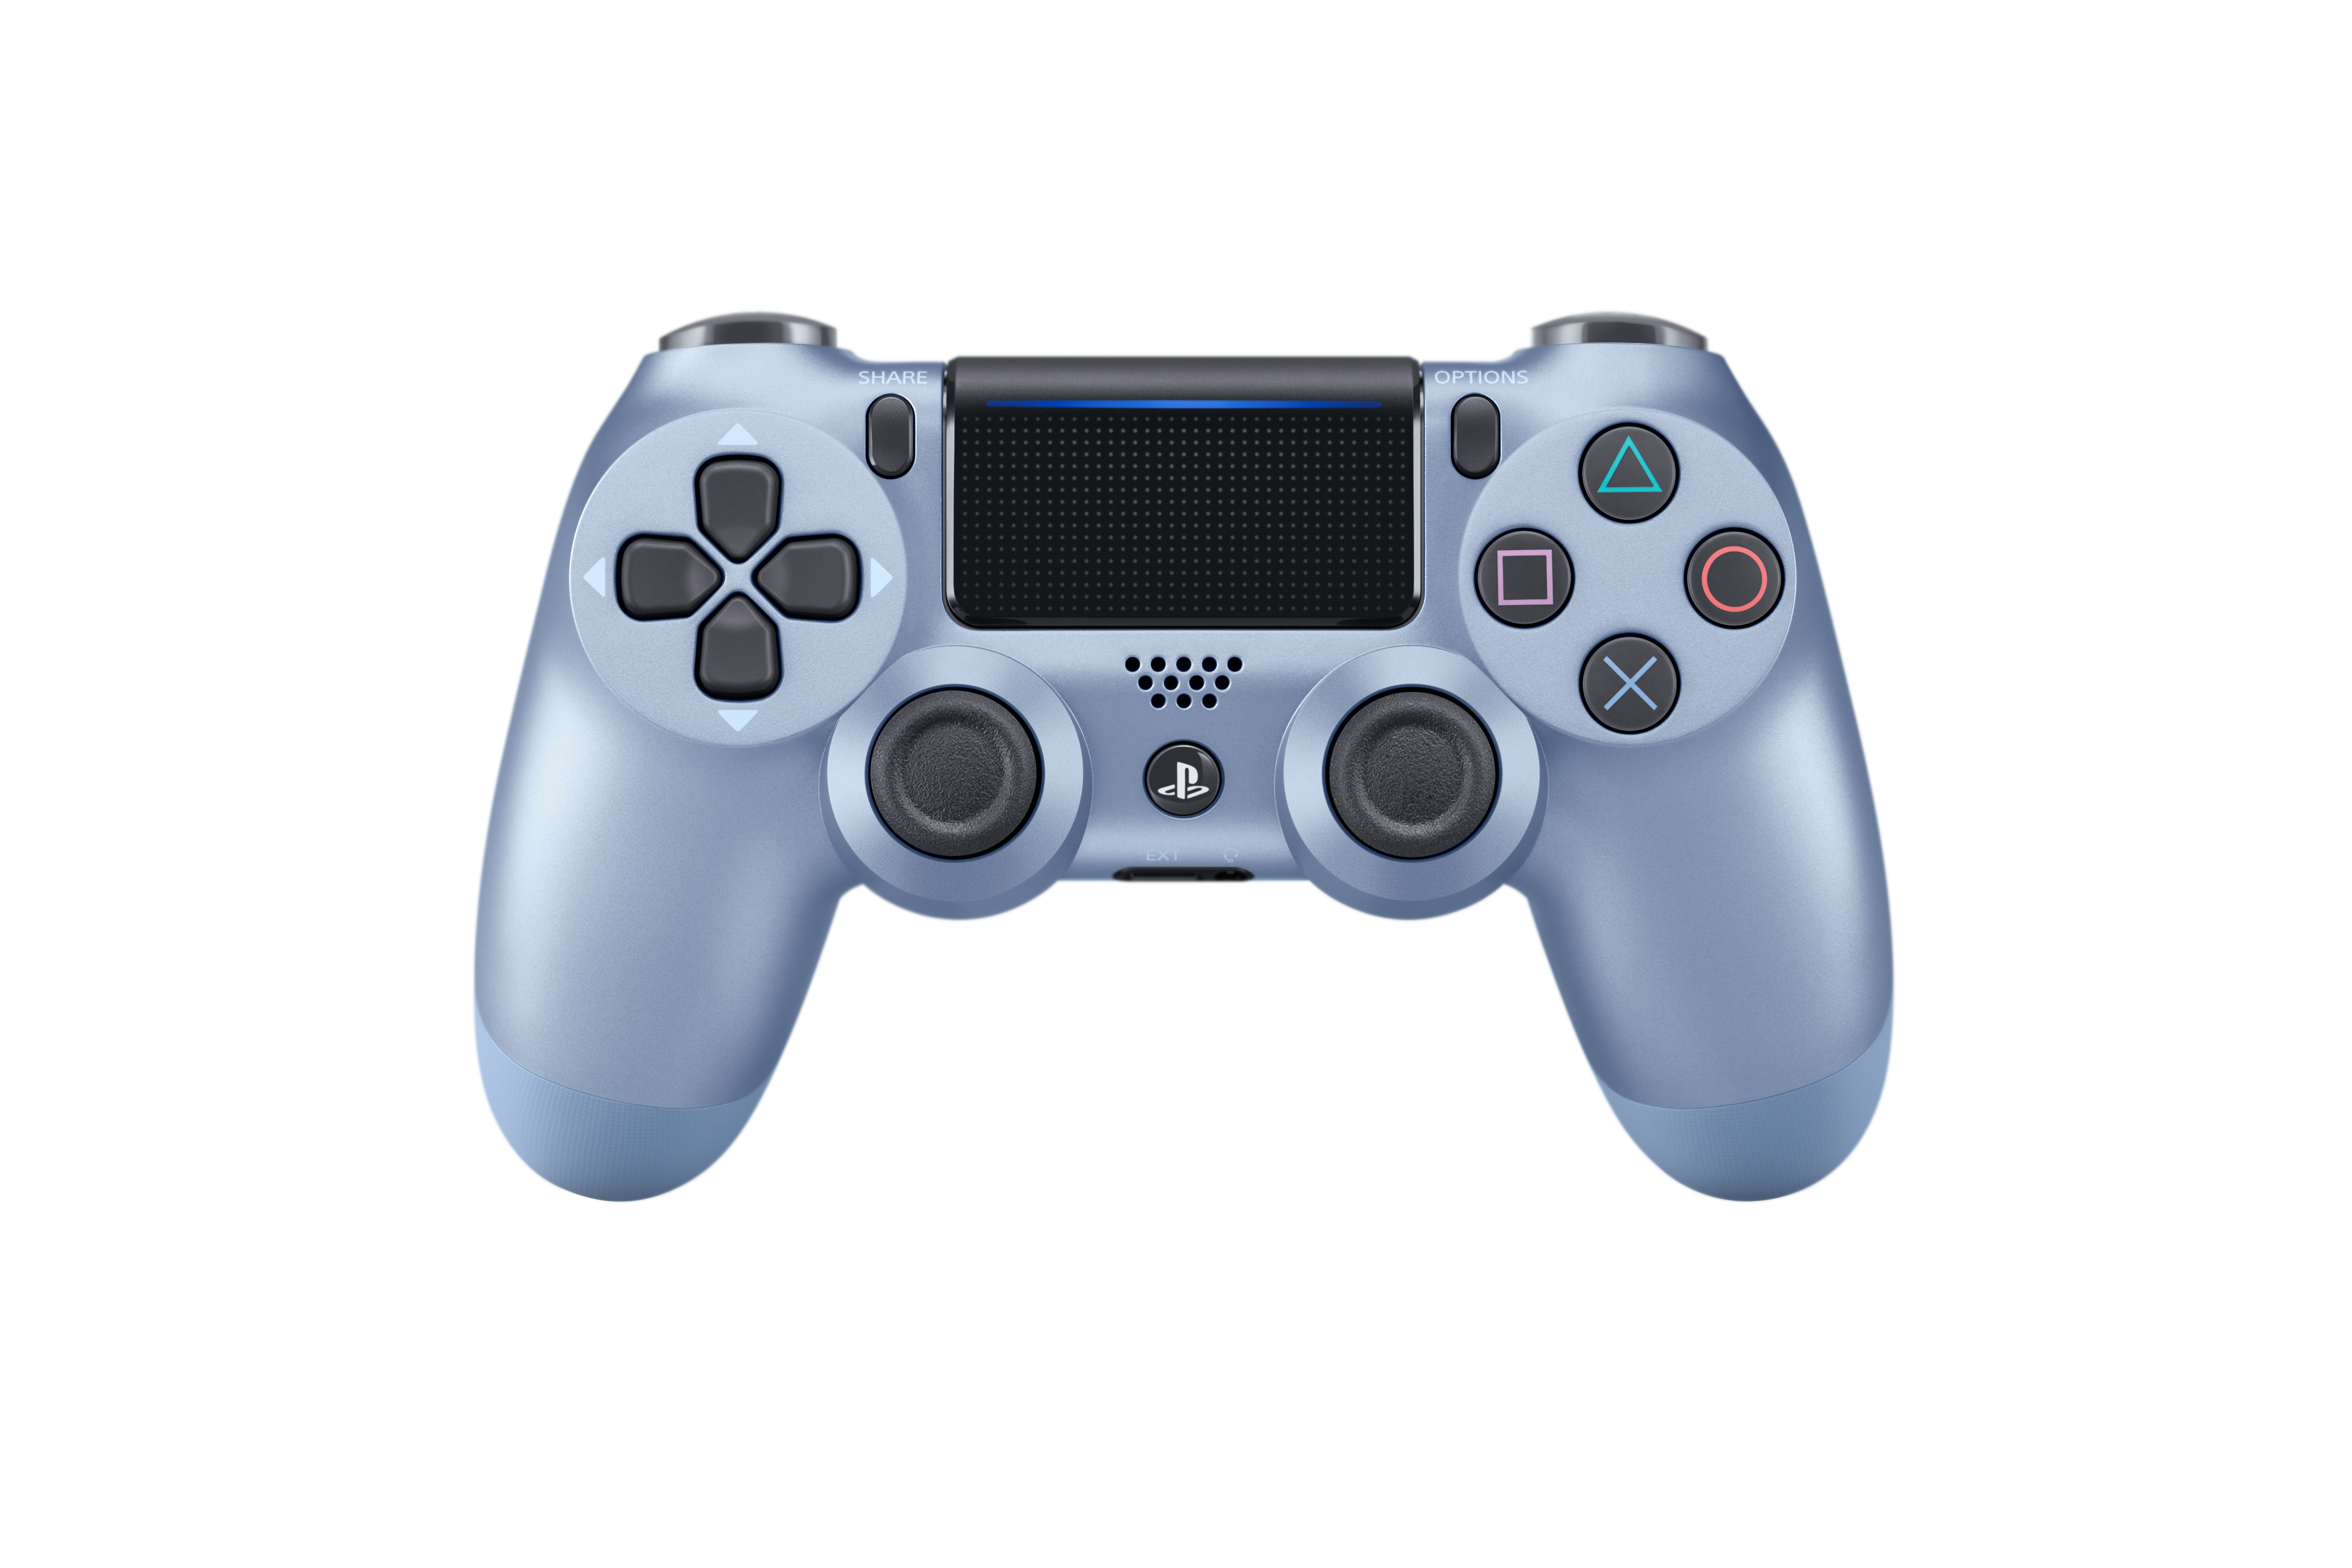 a blue ps4 controller